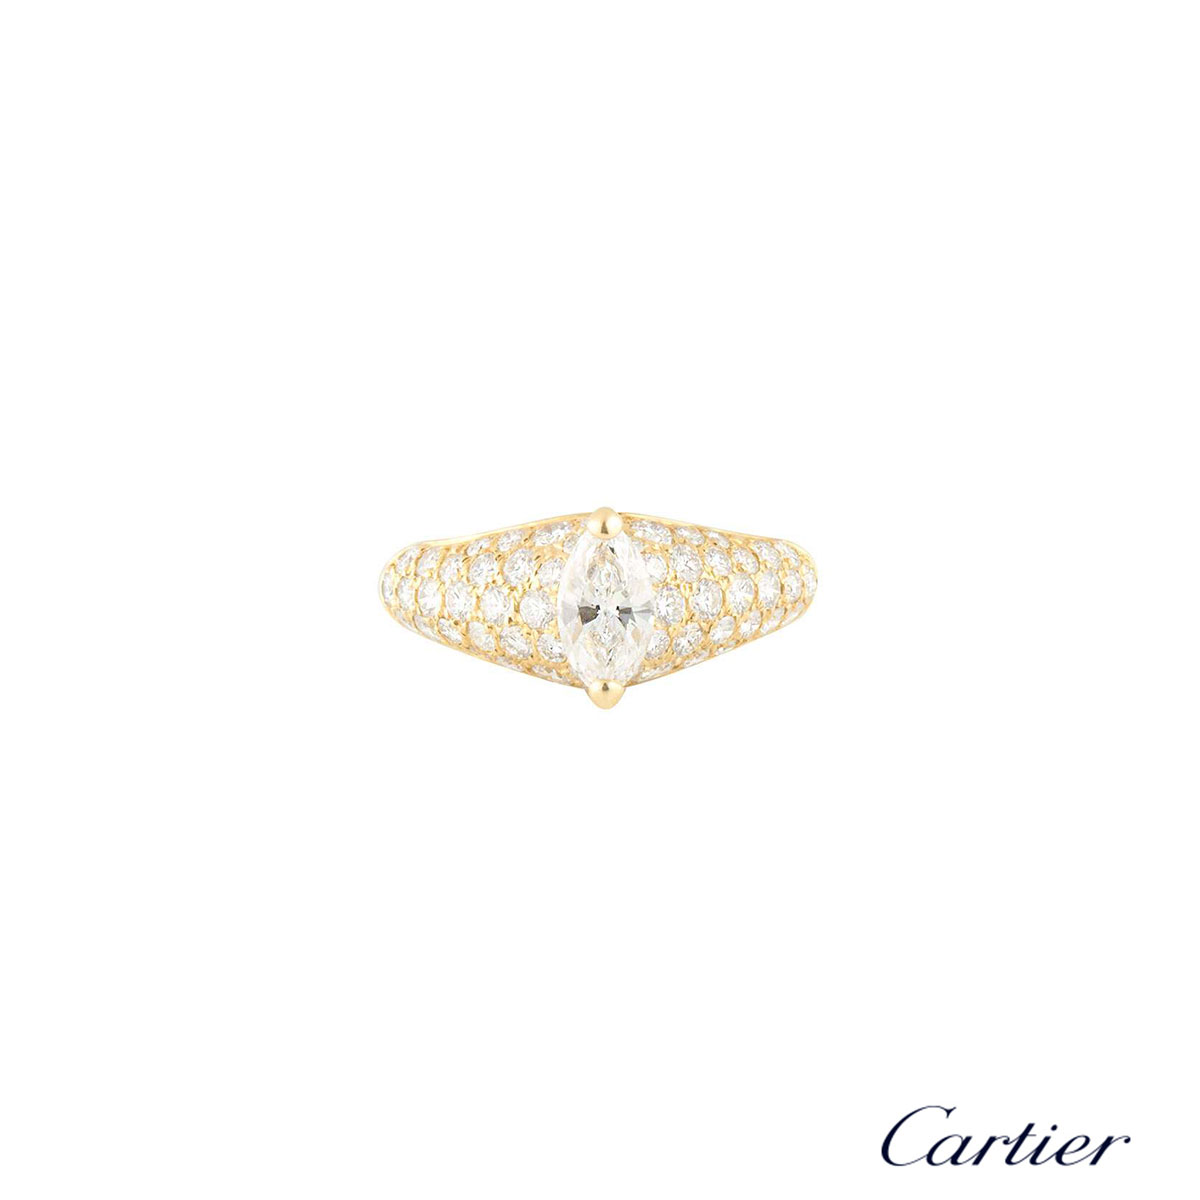 Marquise Diamond Ring - Cartier, Inc. — Google Arts & Culture